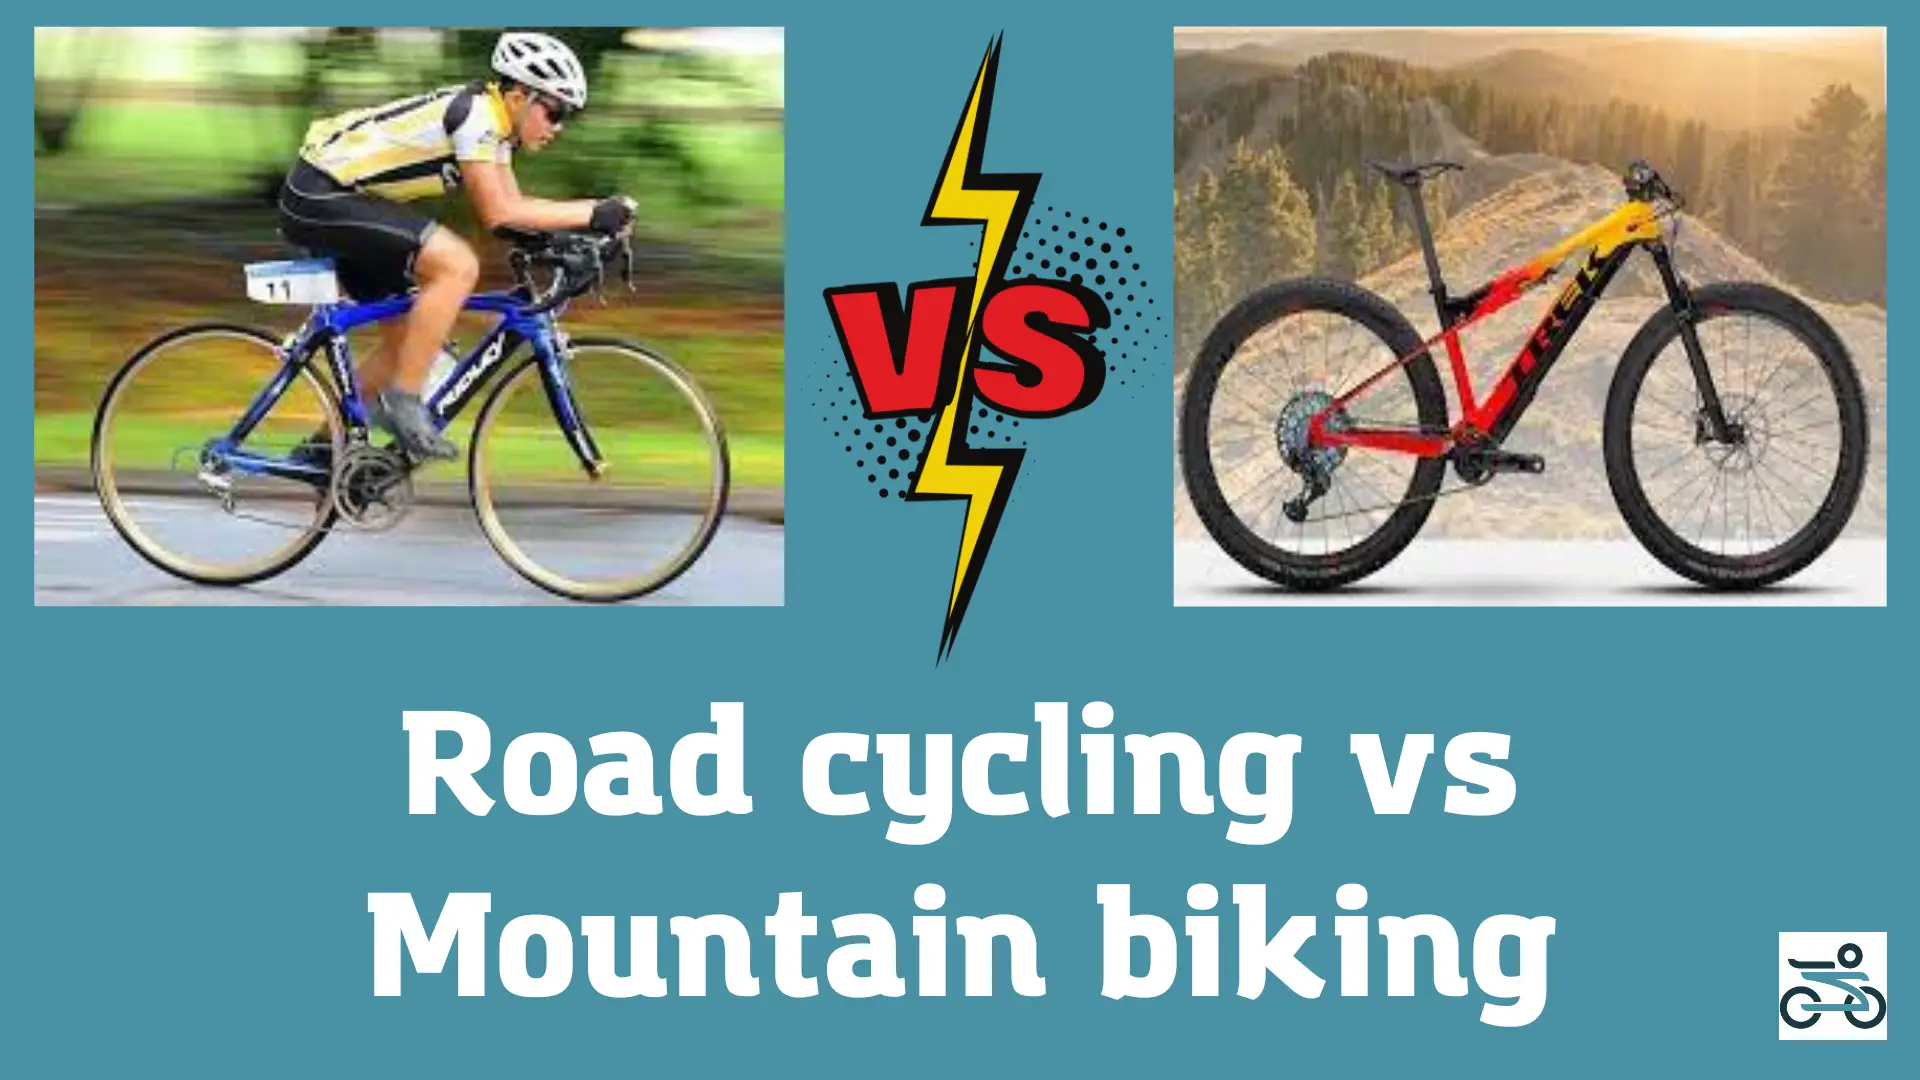 Road Cycling Vs Mountain Biking - Competitive review